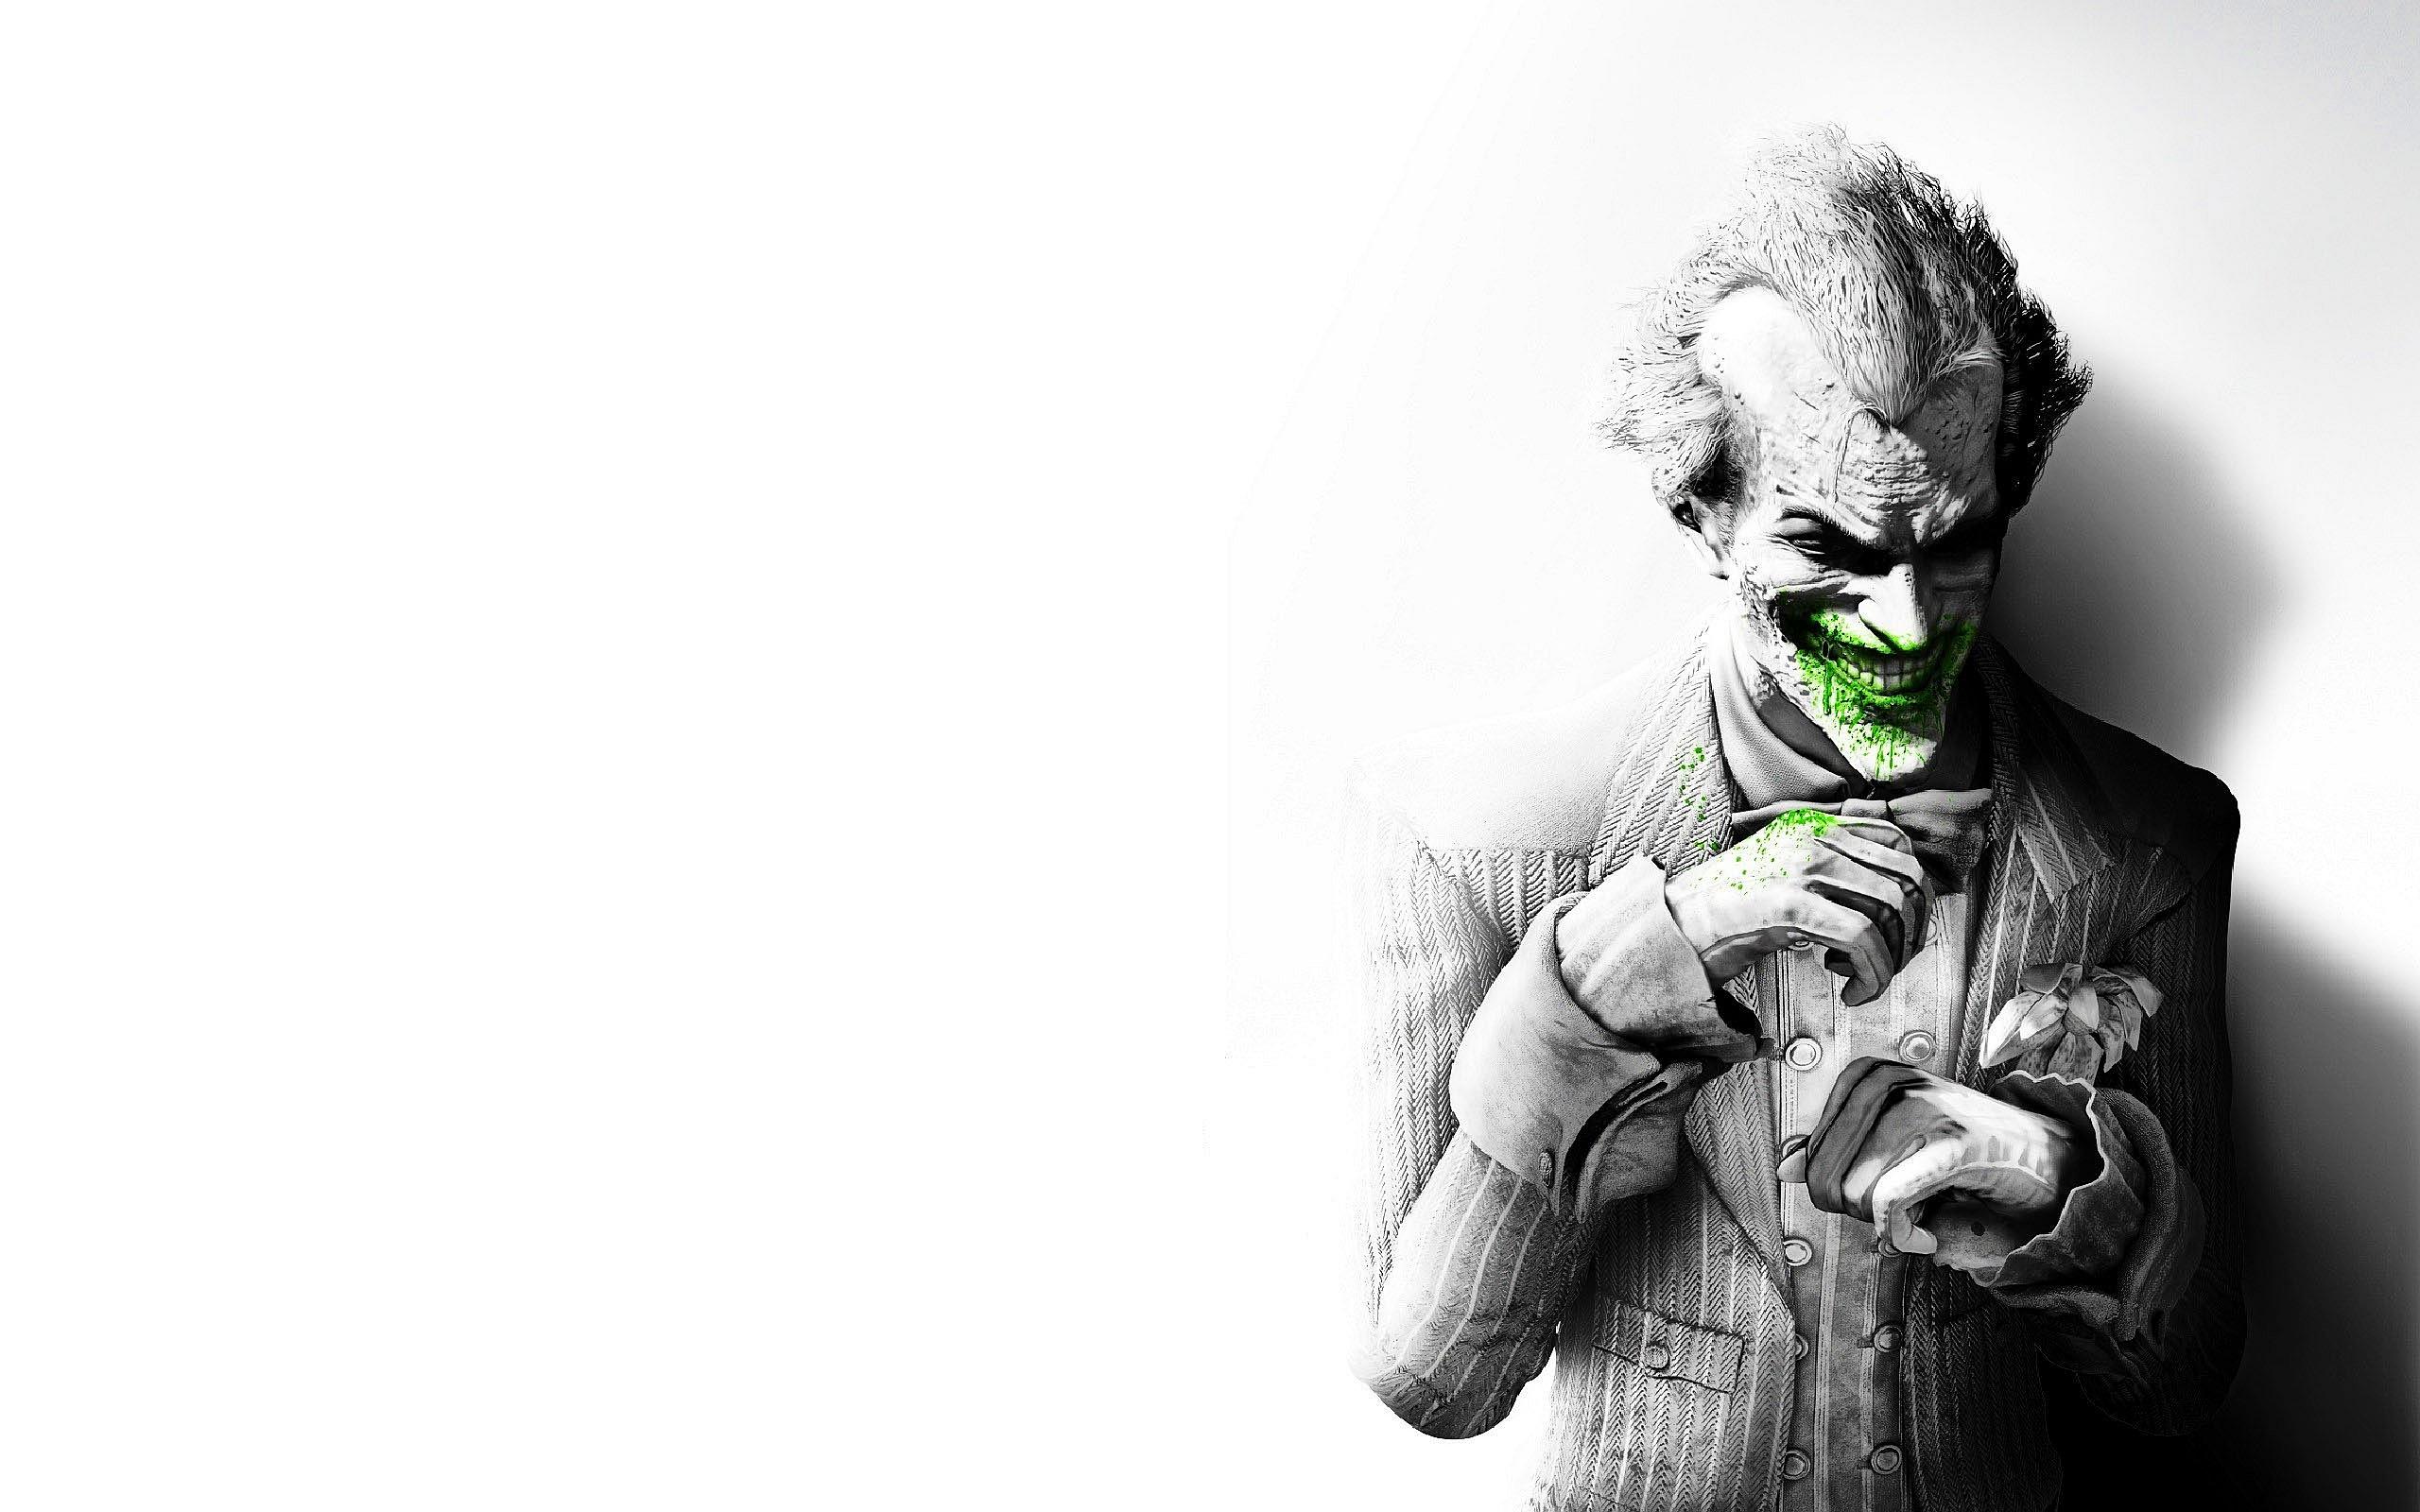 Laughing Joker Wallpaper Picture Photo Image